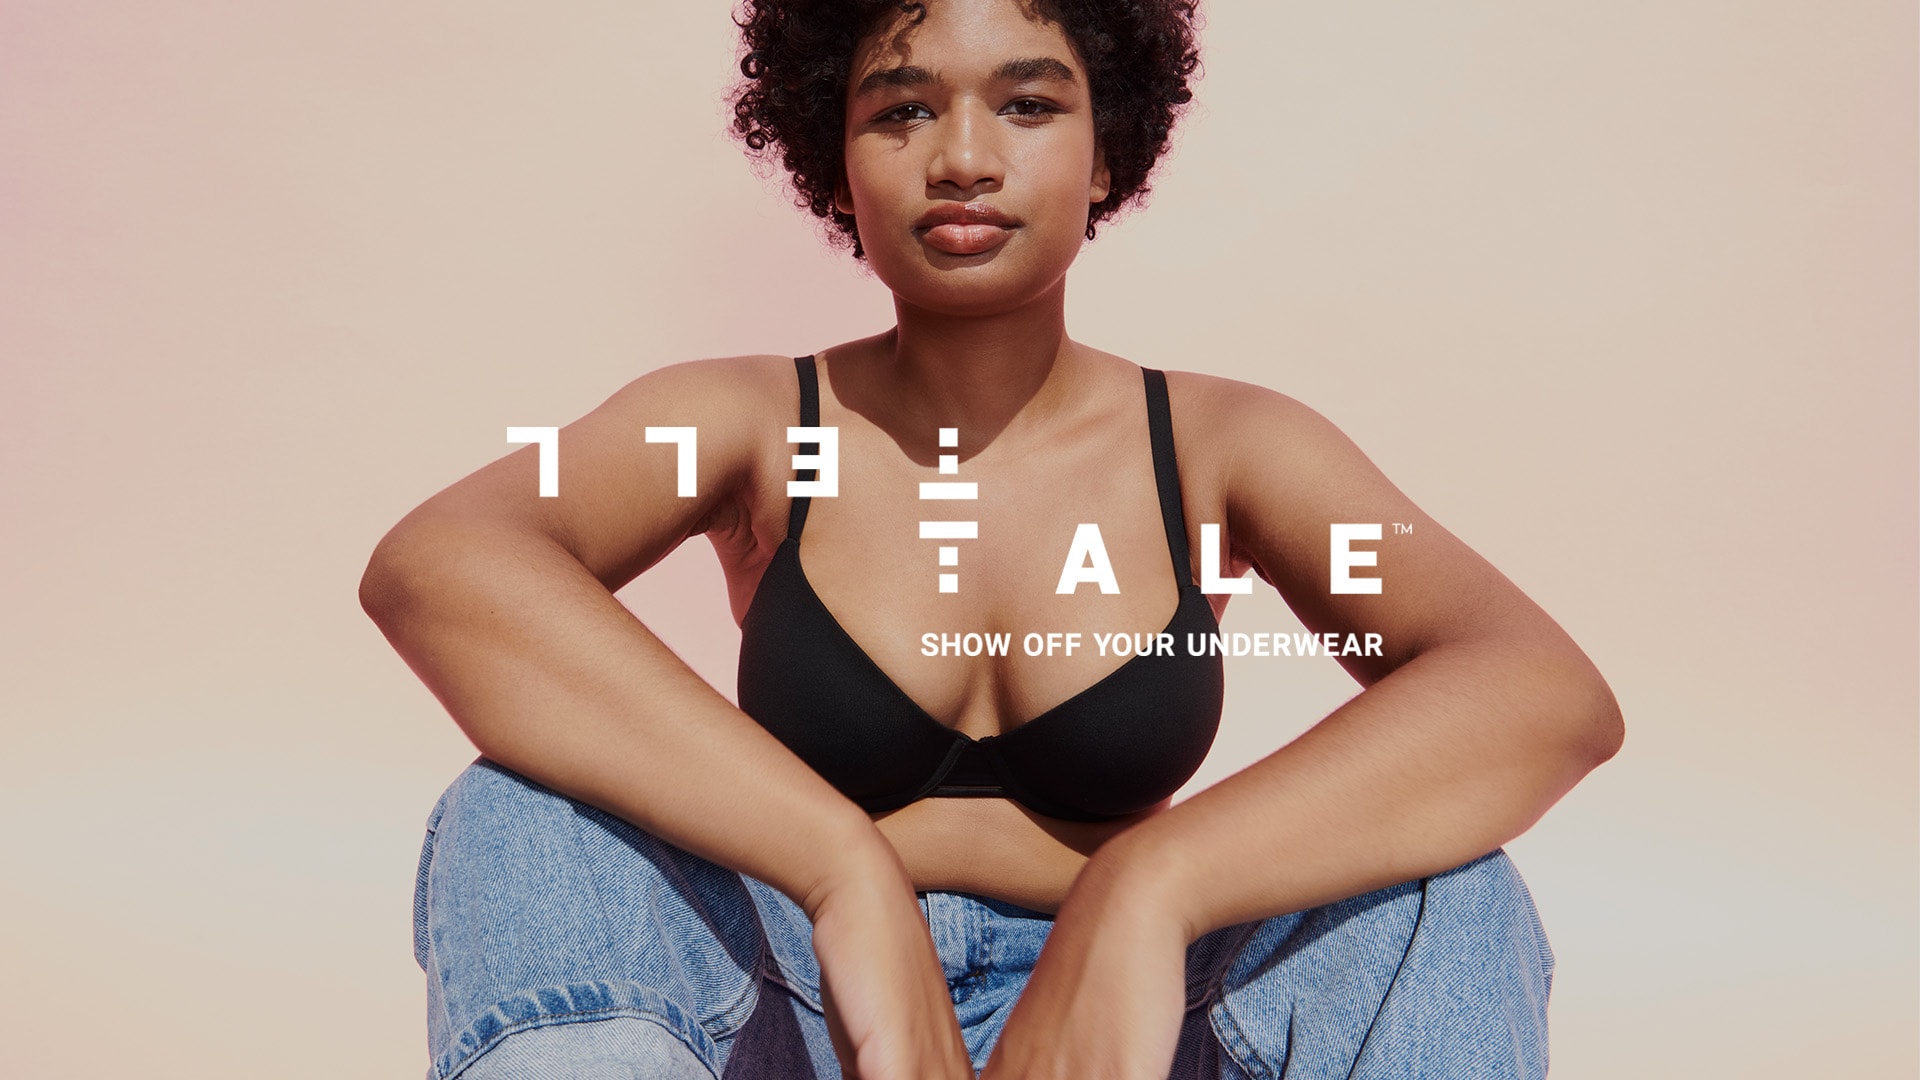 Shop Panties by TellTale - Cheeky, Thong, Bikini & More - Soma